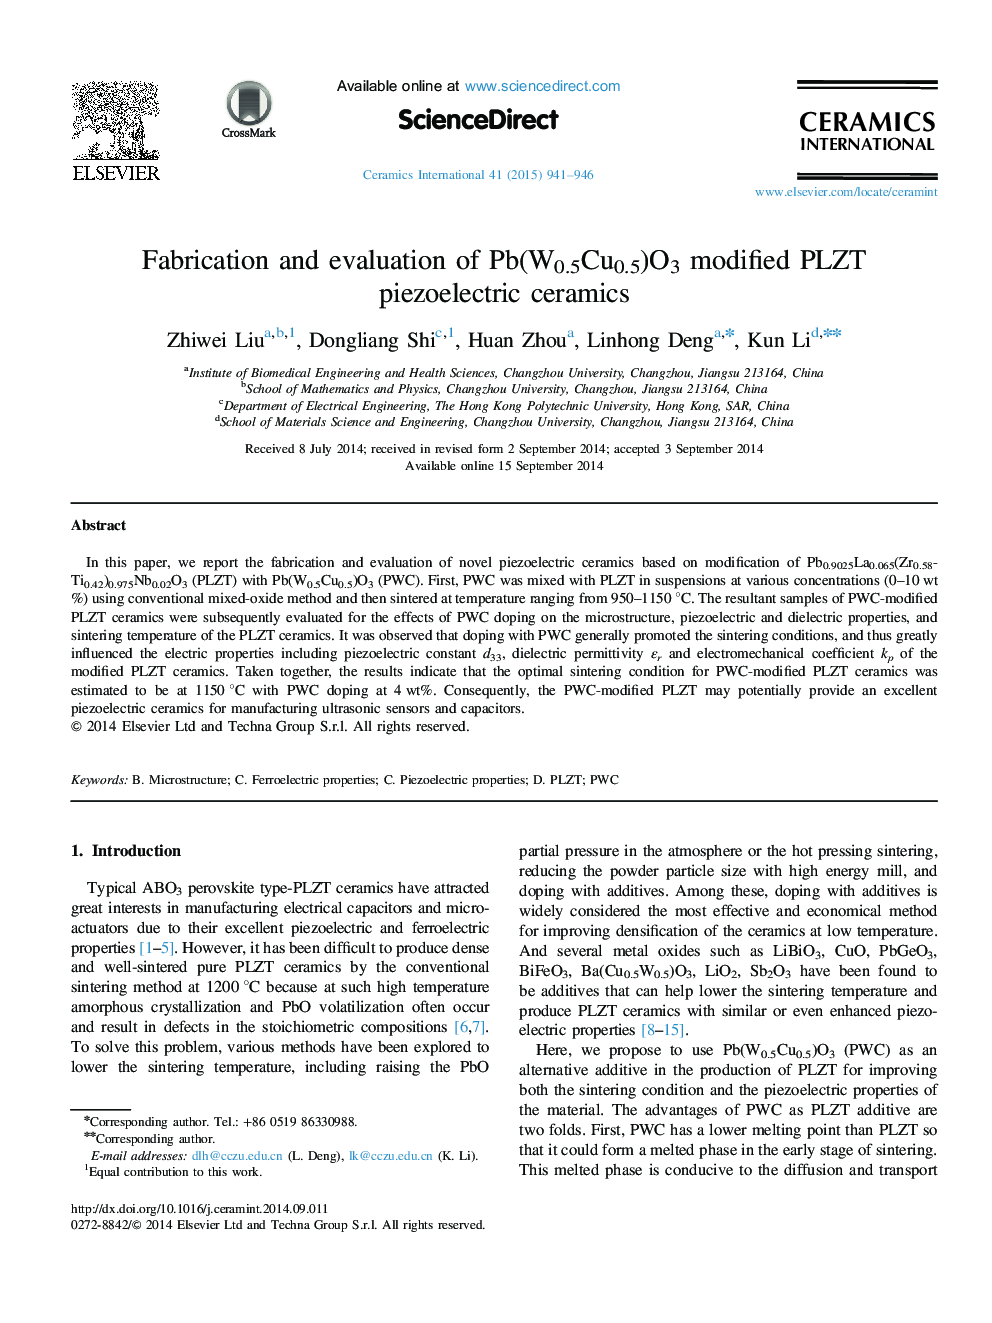 Fabrication and evaluation of Pb(W0.5Cu0.5)O3 modified PLZT piezoelectric ceramics